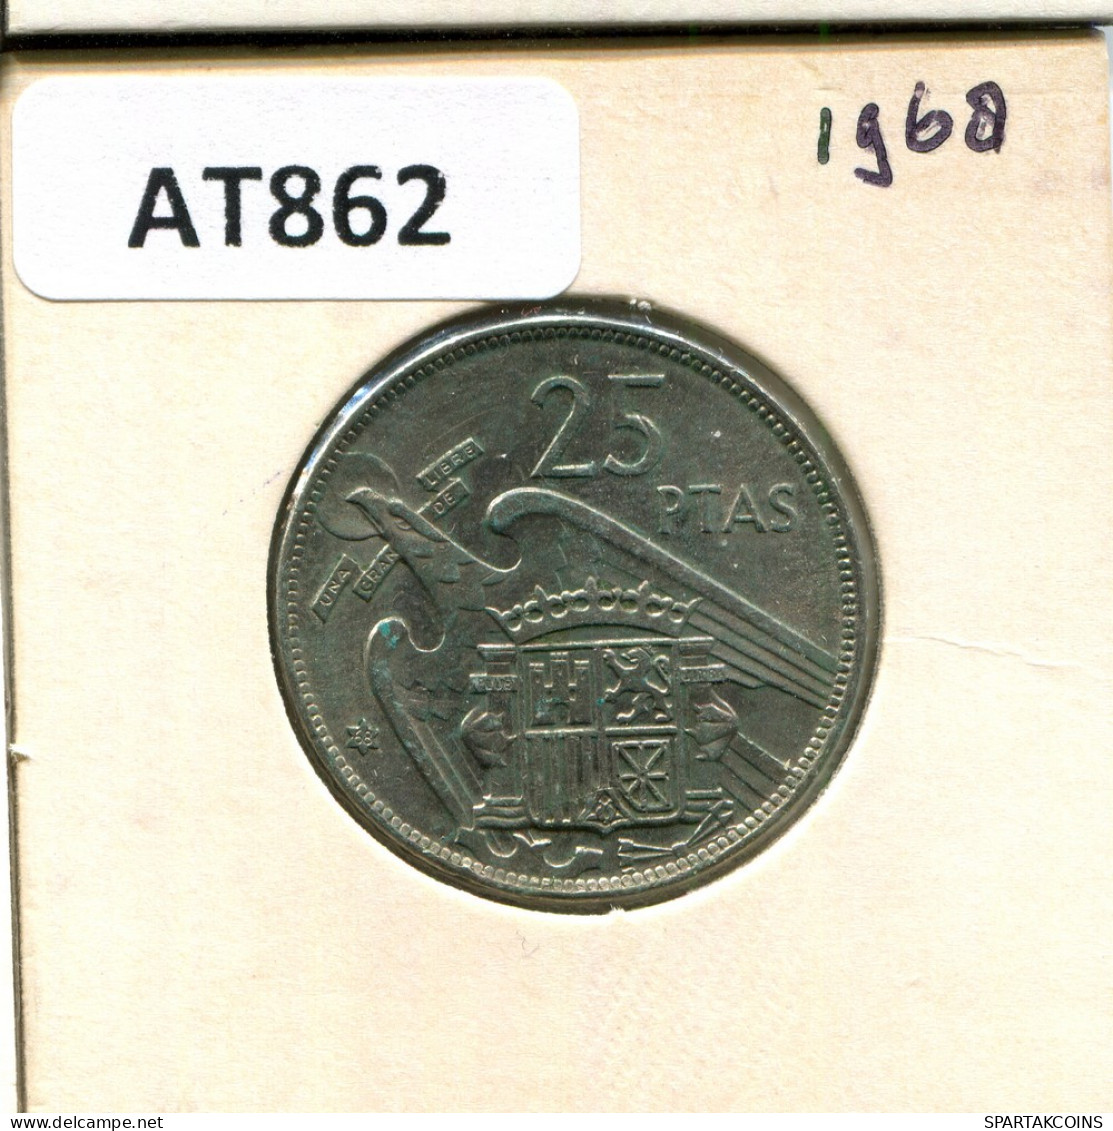 25 PESETAS 1968 SPAIN Coin #AT862.U - 25 Pesetas